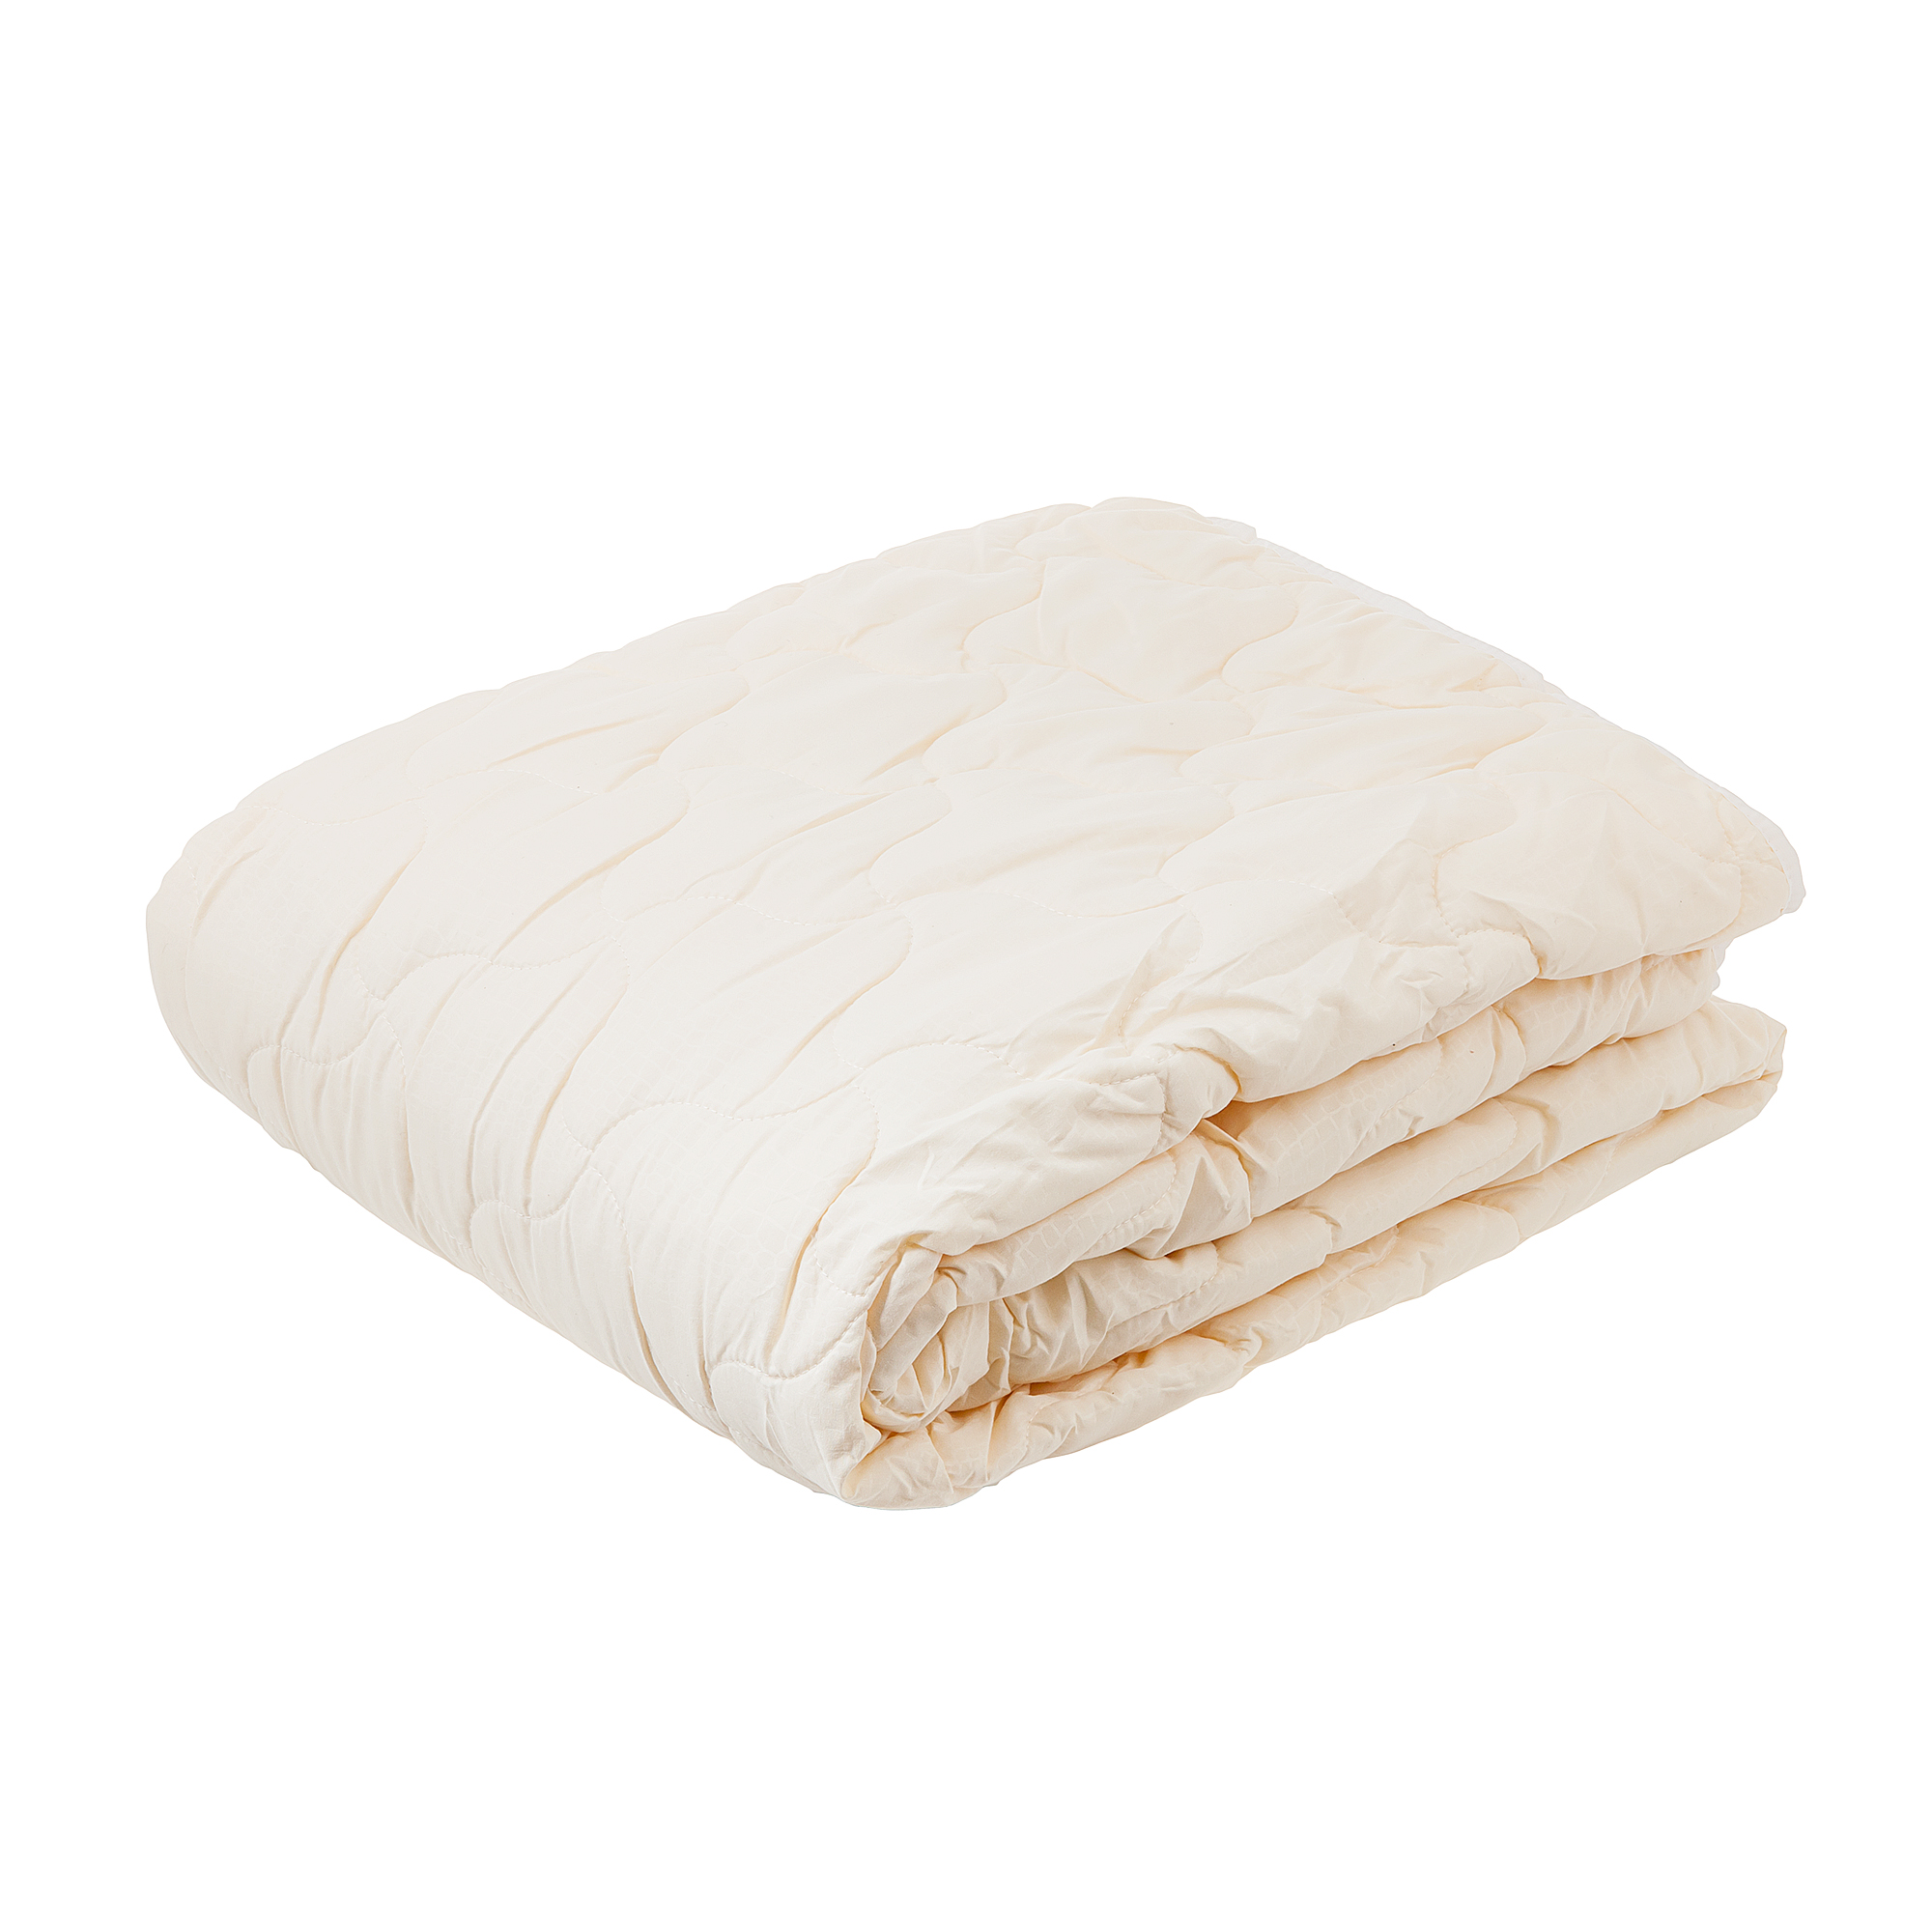 Одеяло – плед Belashoff летнее 200x220 одеяло овечья шерсть оригинал р 200х220